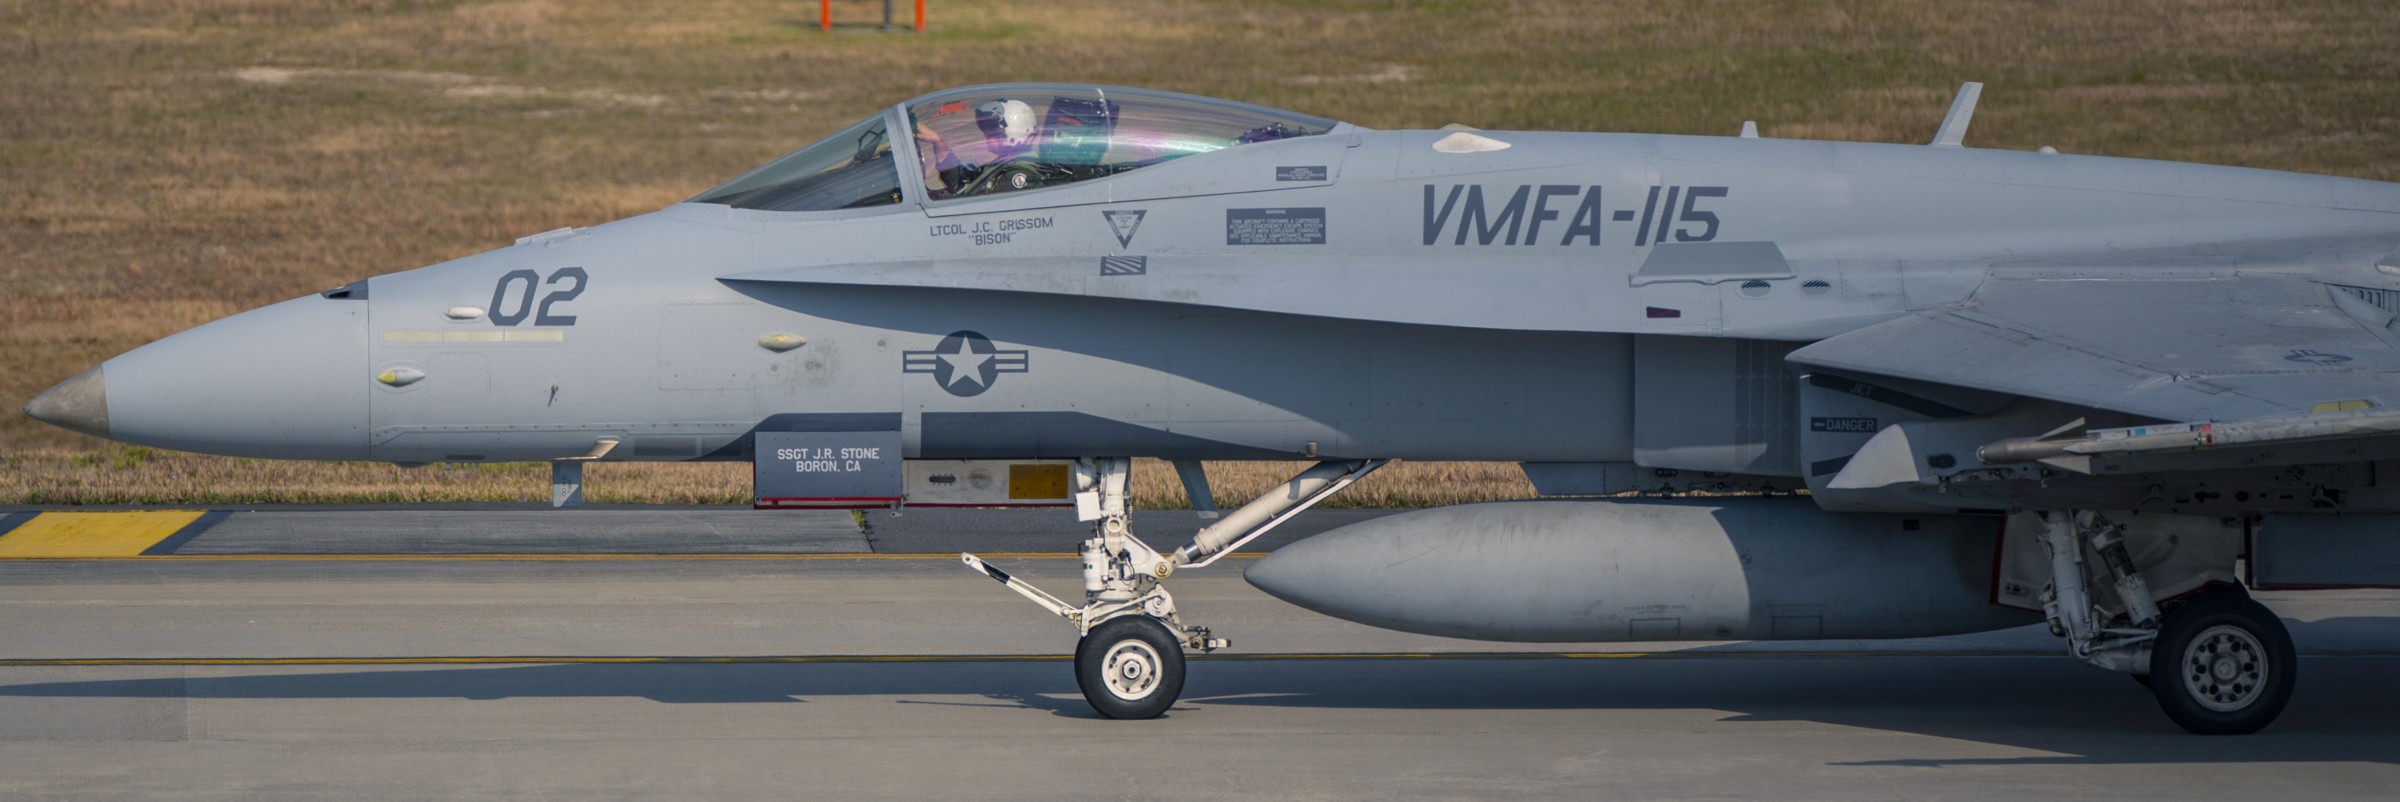 vmfa-115 silver eagles marine fighter attack squadron usmc f/a-18c hornet 195 mcas iwakuni japan